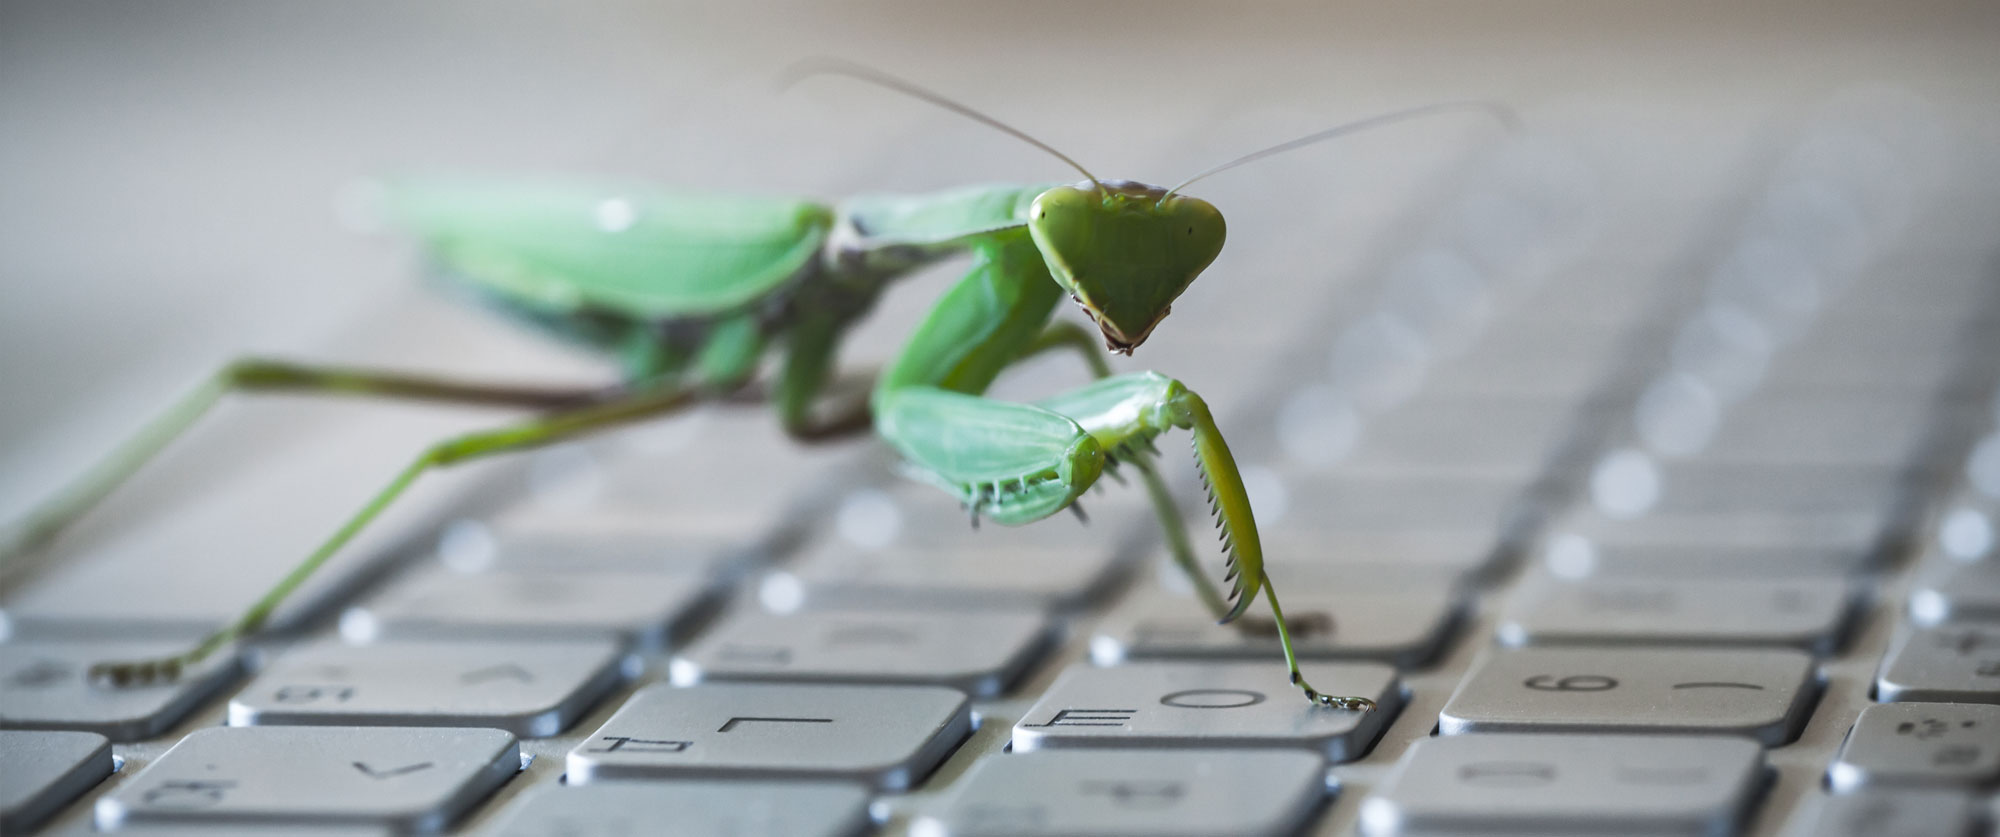 bug on laptop